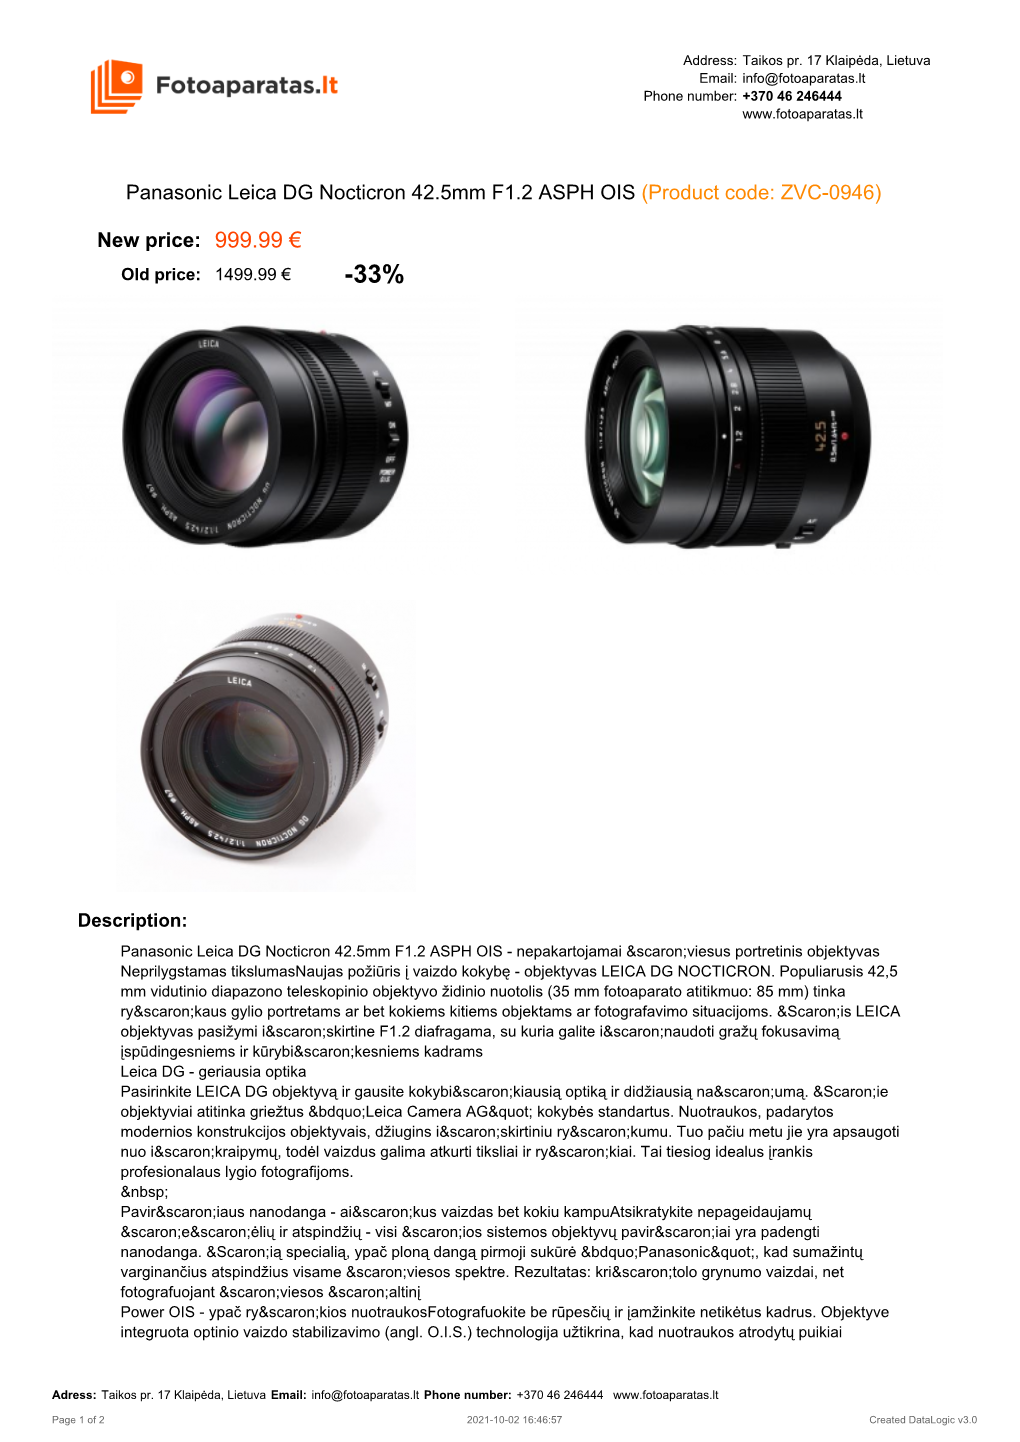 Panasonic Leica DG Nocticron 42.5Mm F1.2 ASPH OIS (Product Code: ZVC-0946)